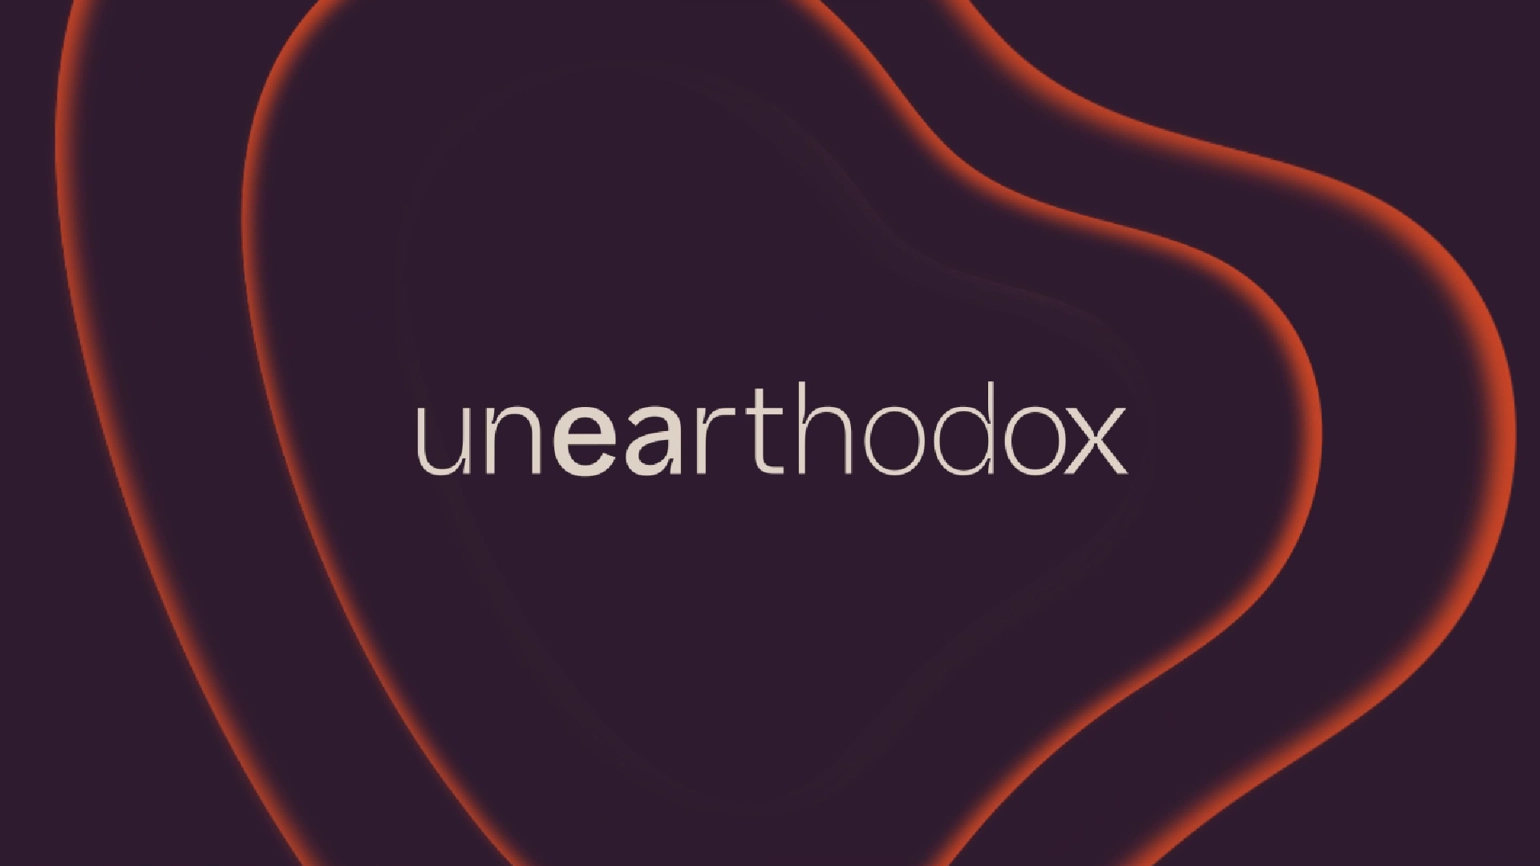 Unearthodox logo on dark purple background with orange circular ripples